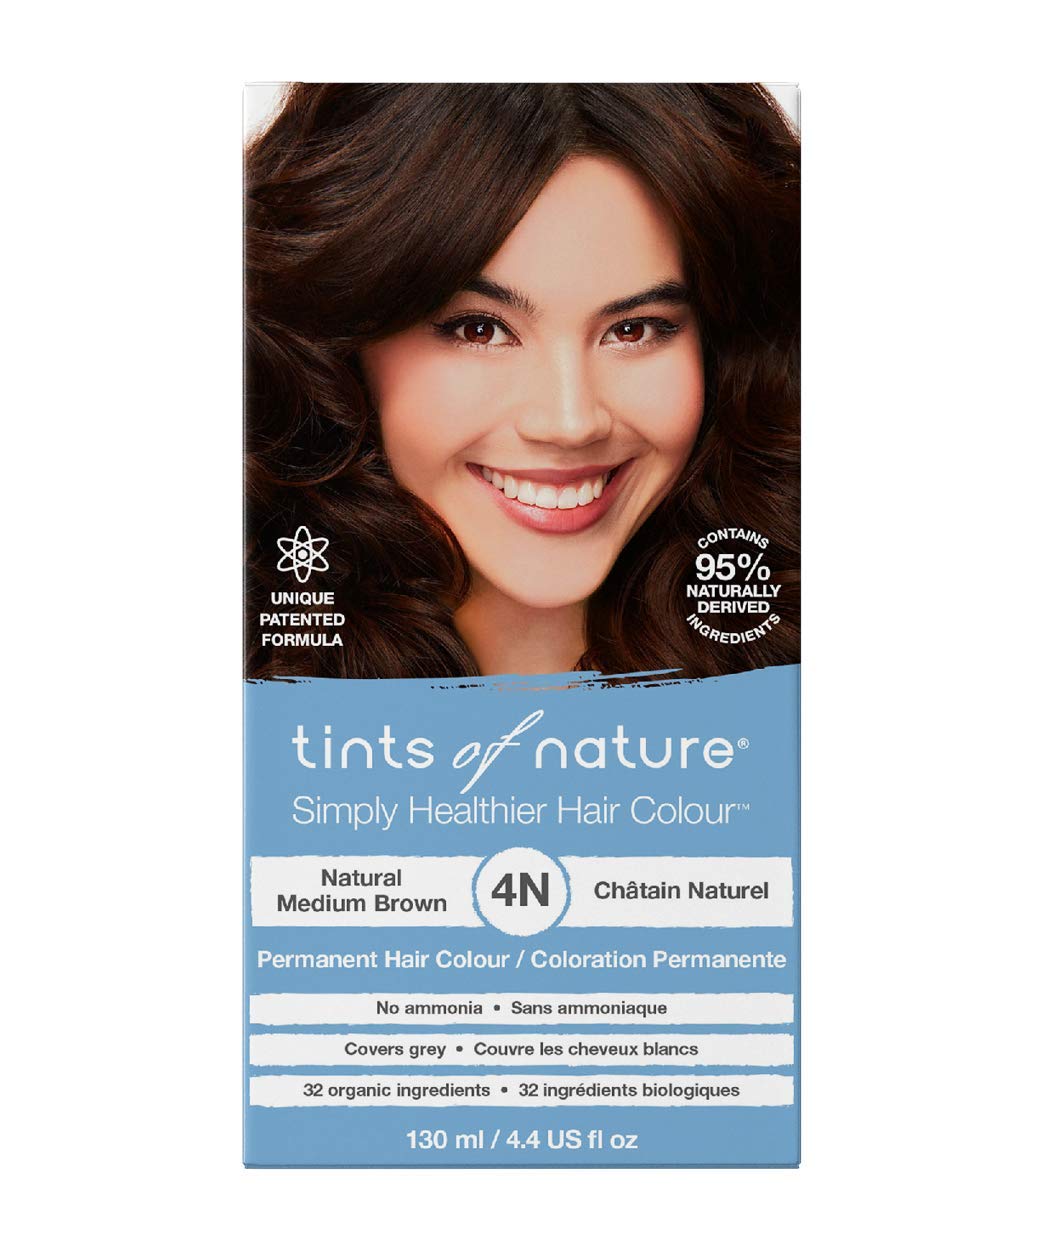 Tints of Nature Natural Permanent Hair Dye, Nourishes Hair & Covers Greys,  1 x 130ml - 4N Medium Brown Single Medium Brown (4N)